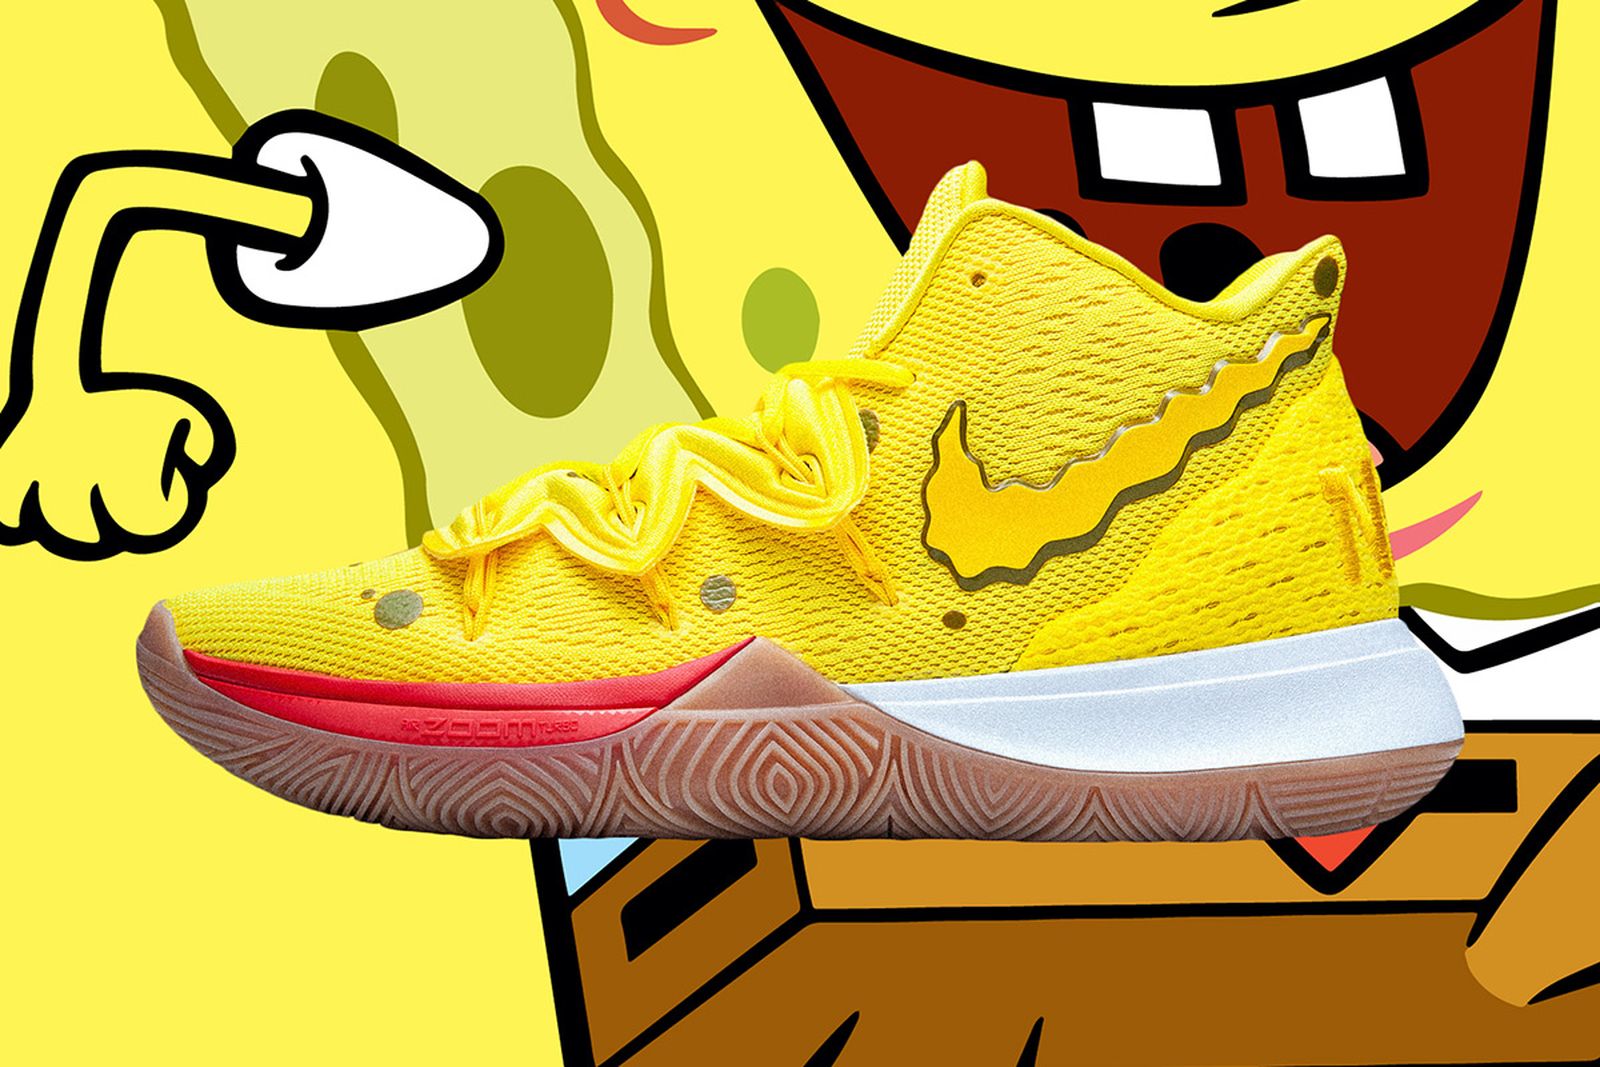 Shop the SpongeBob Squarepants x Nike Kyrie Collection